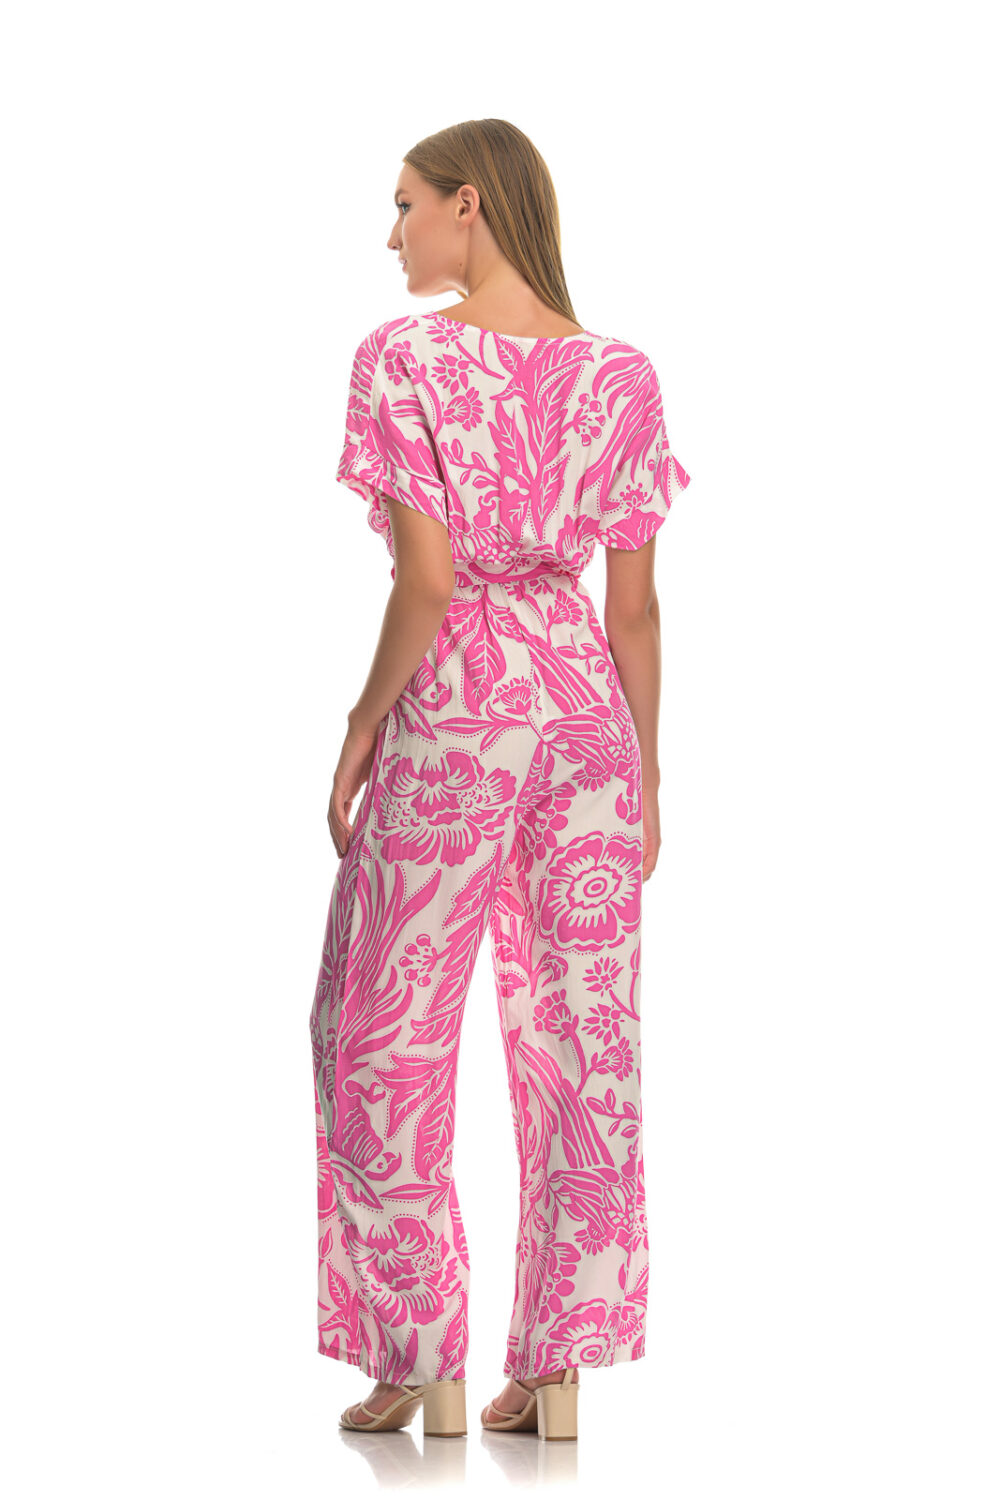 Floral bodysuit with the same belt pink